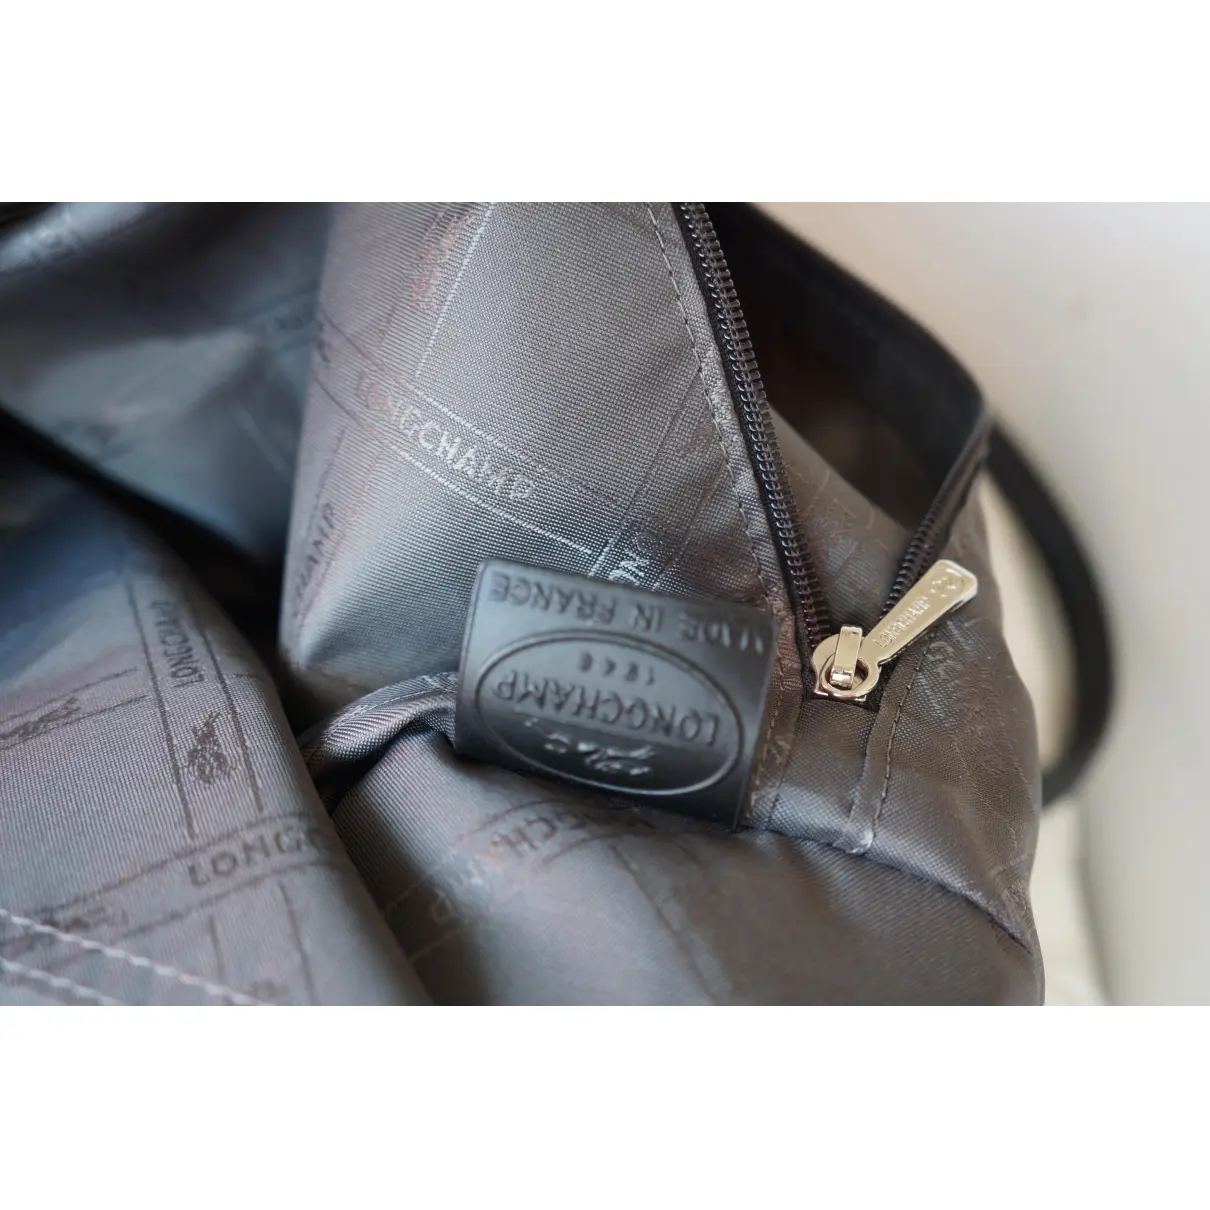 Buy Longchamp Roseau leather handbag online